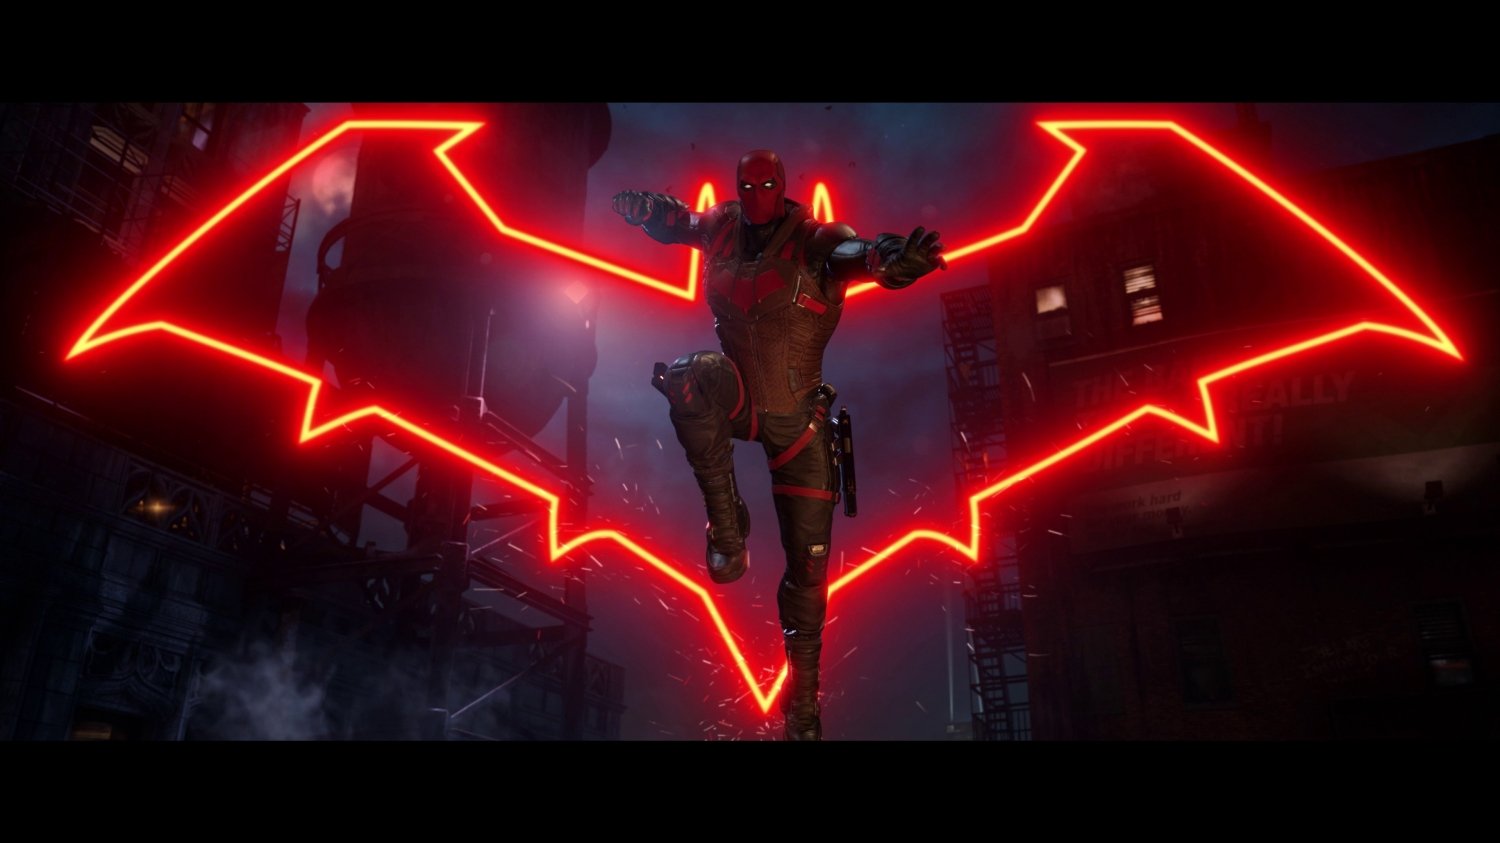 Gotham Knights - Gameplay Walkthrough Part 1 - Batman Is Dead! Batgirl,  Nightwing, Red Hood, & Robin 